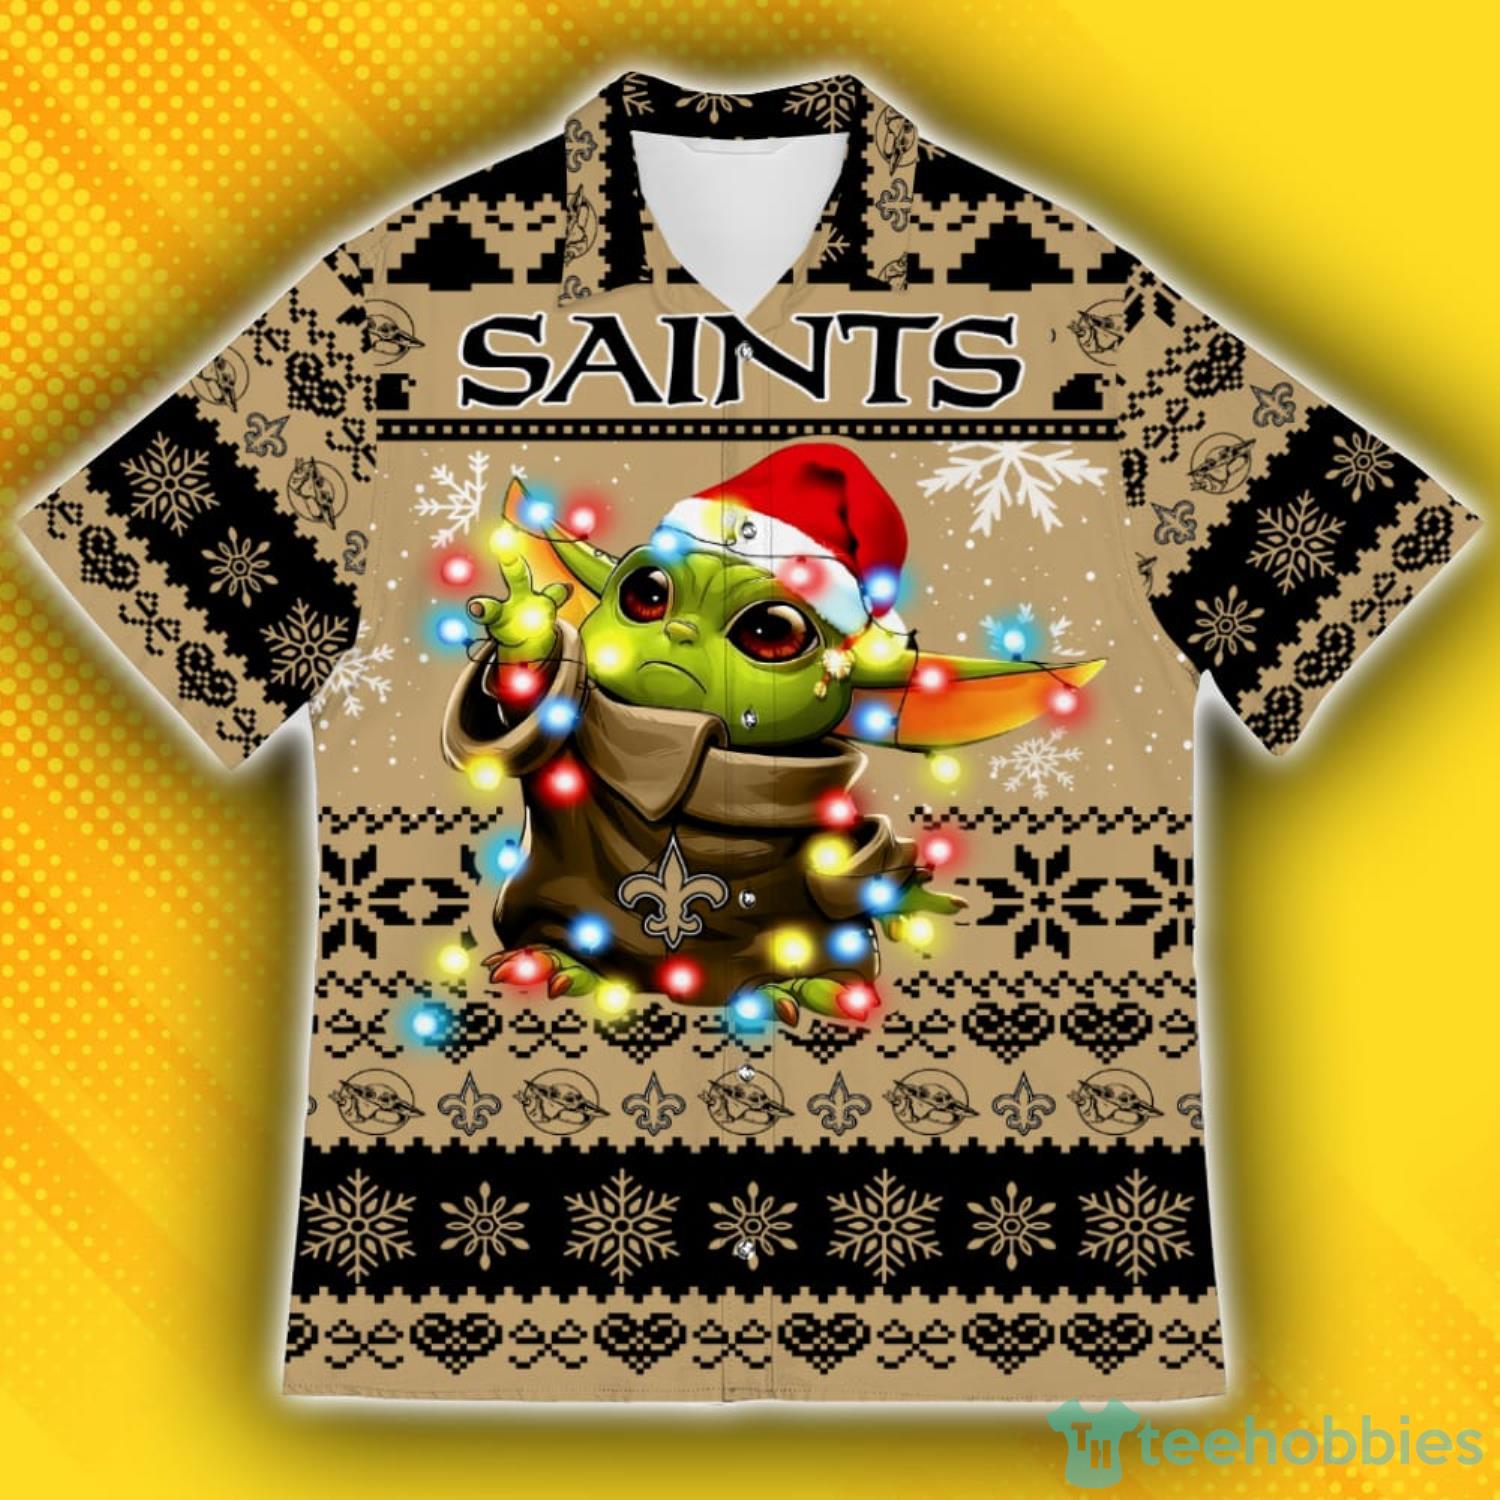 saints star wars shirt